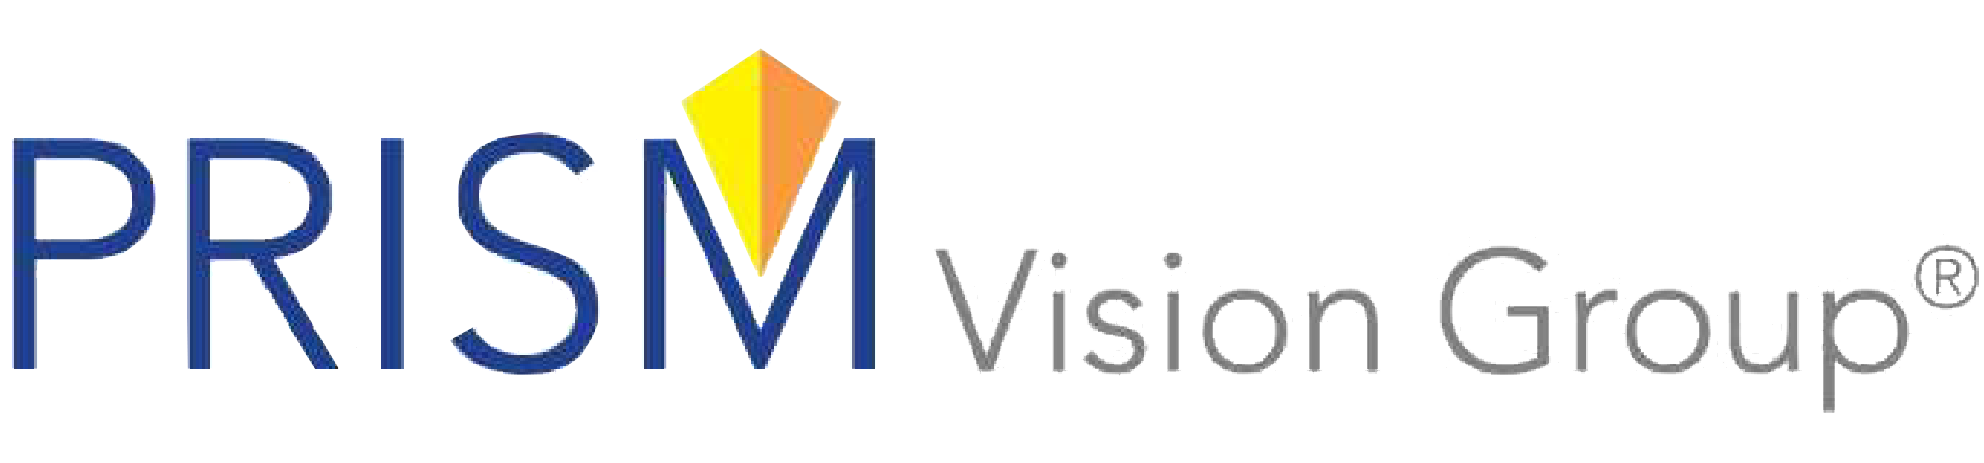 Prism-Vision-Group-Logo-copy-1